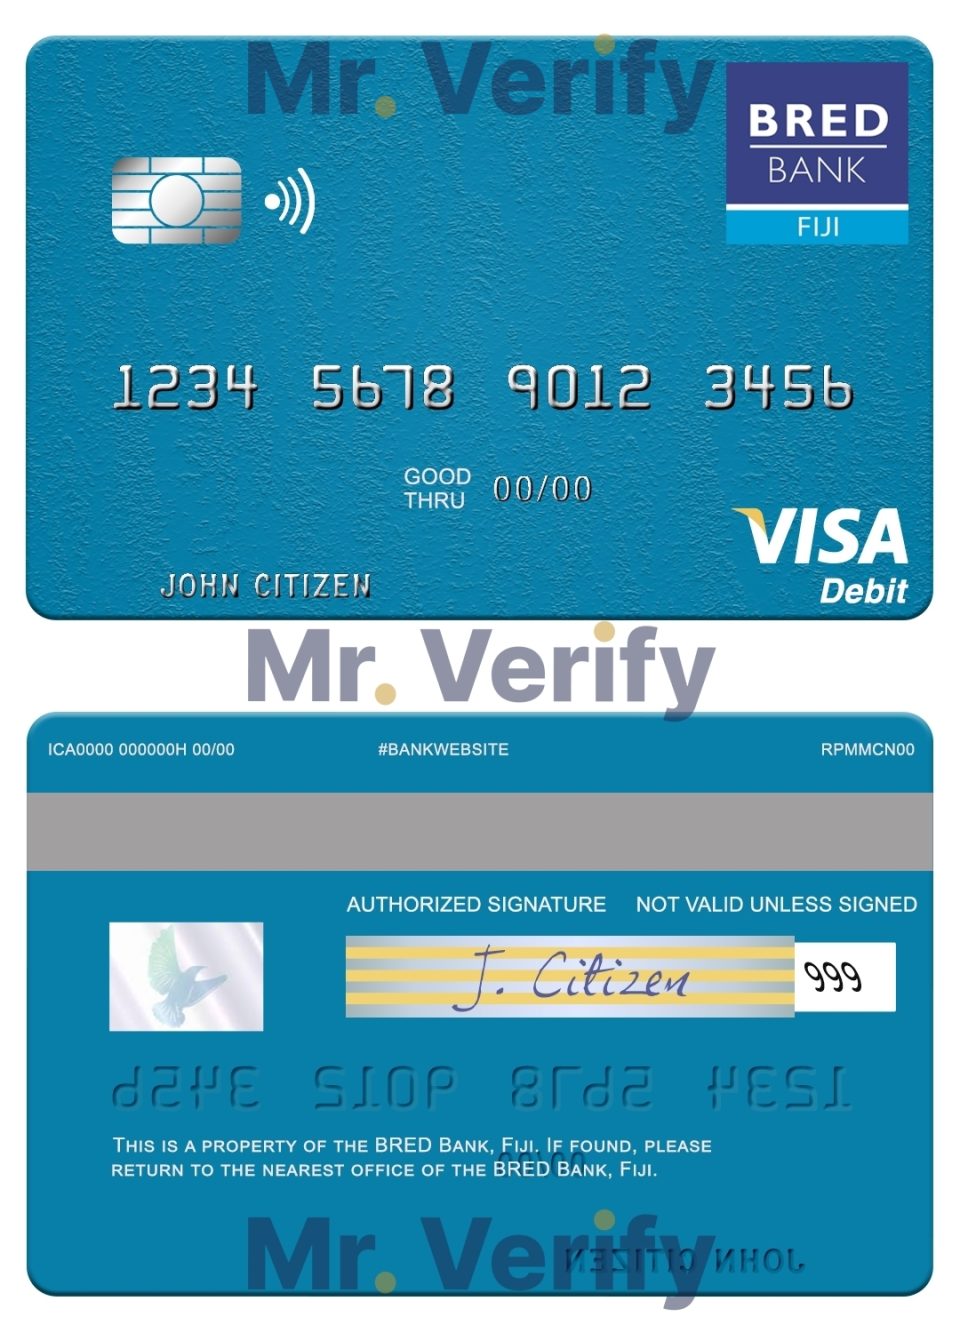 Fillable Fiji BRED Bank visa debit credit card Templates | Layer-Based PSD